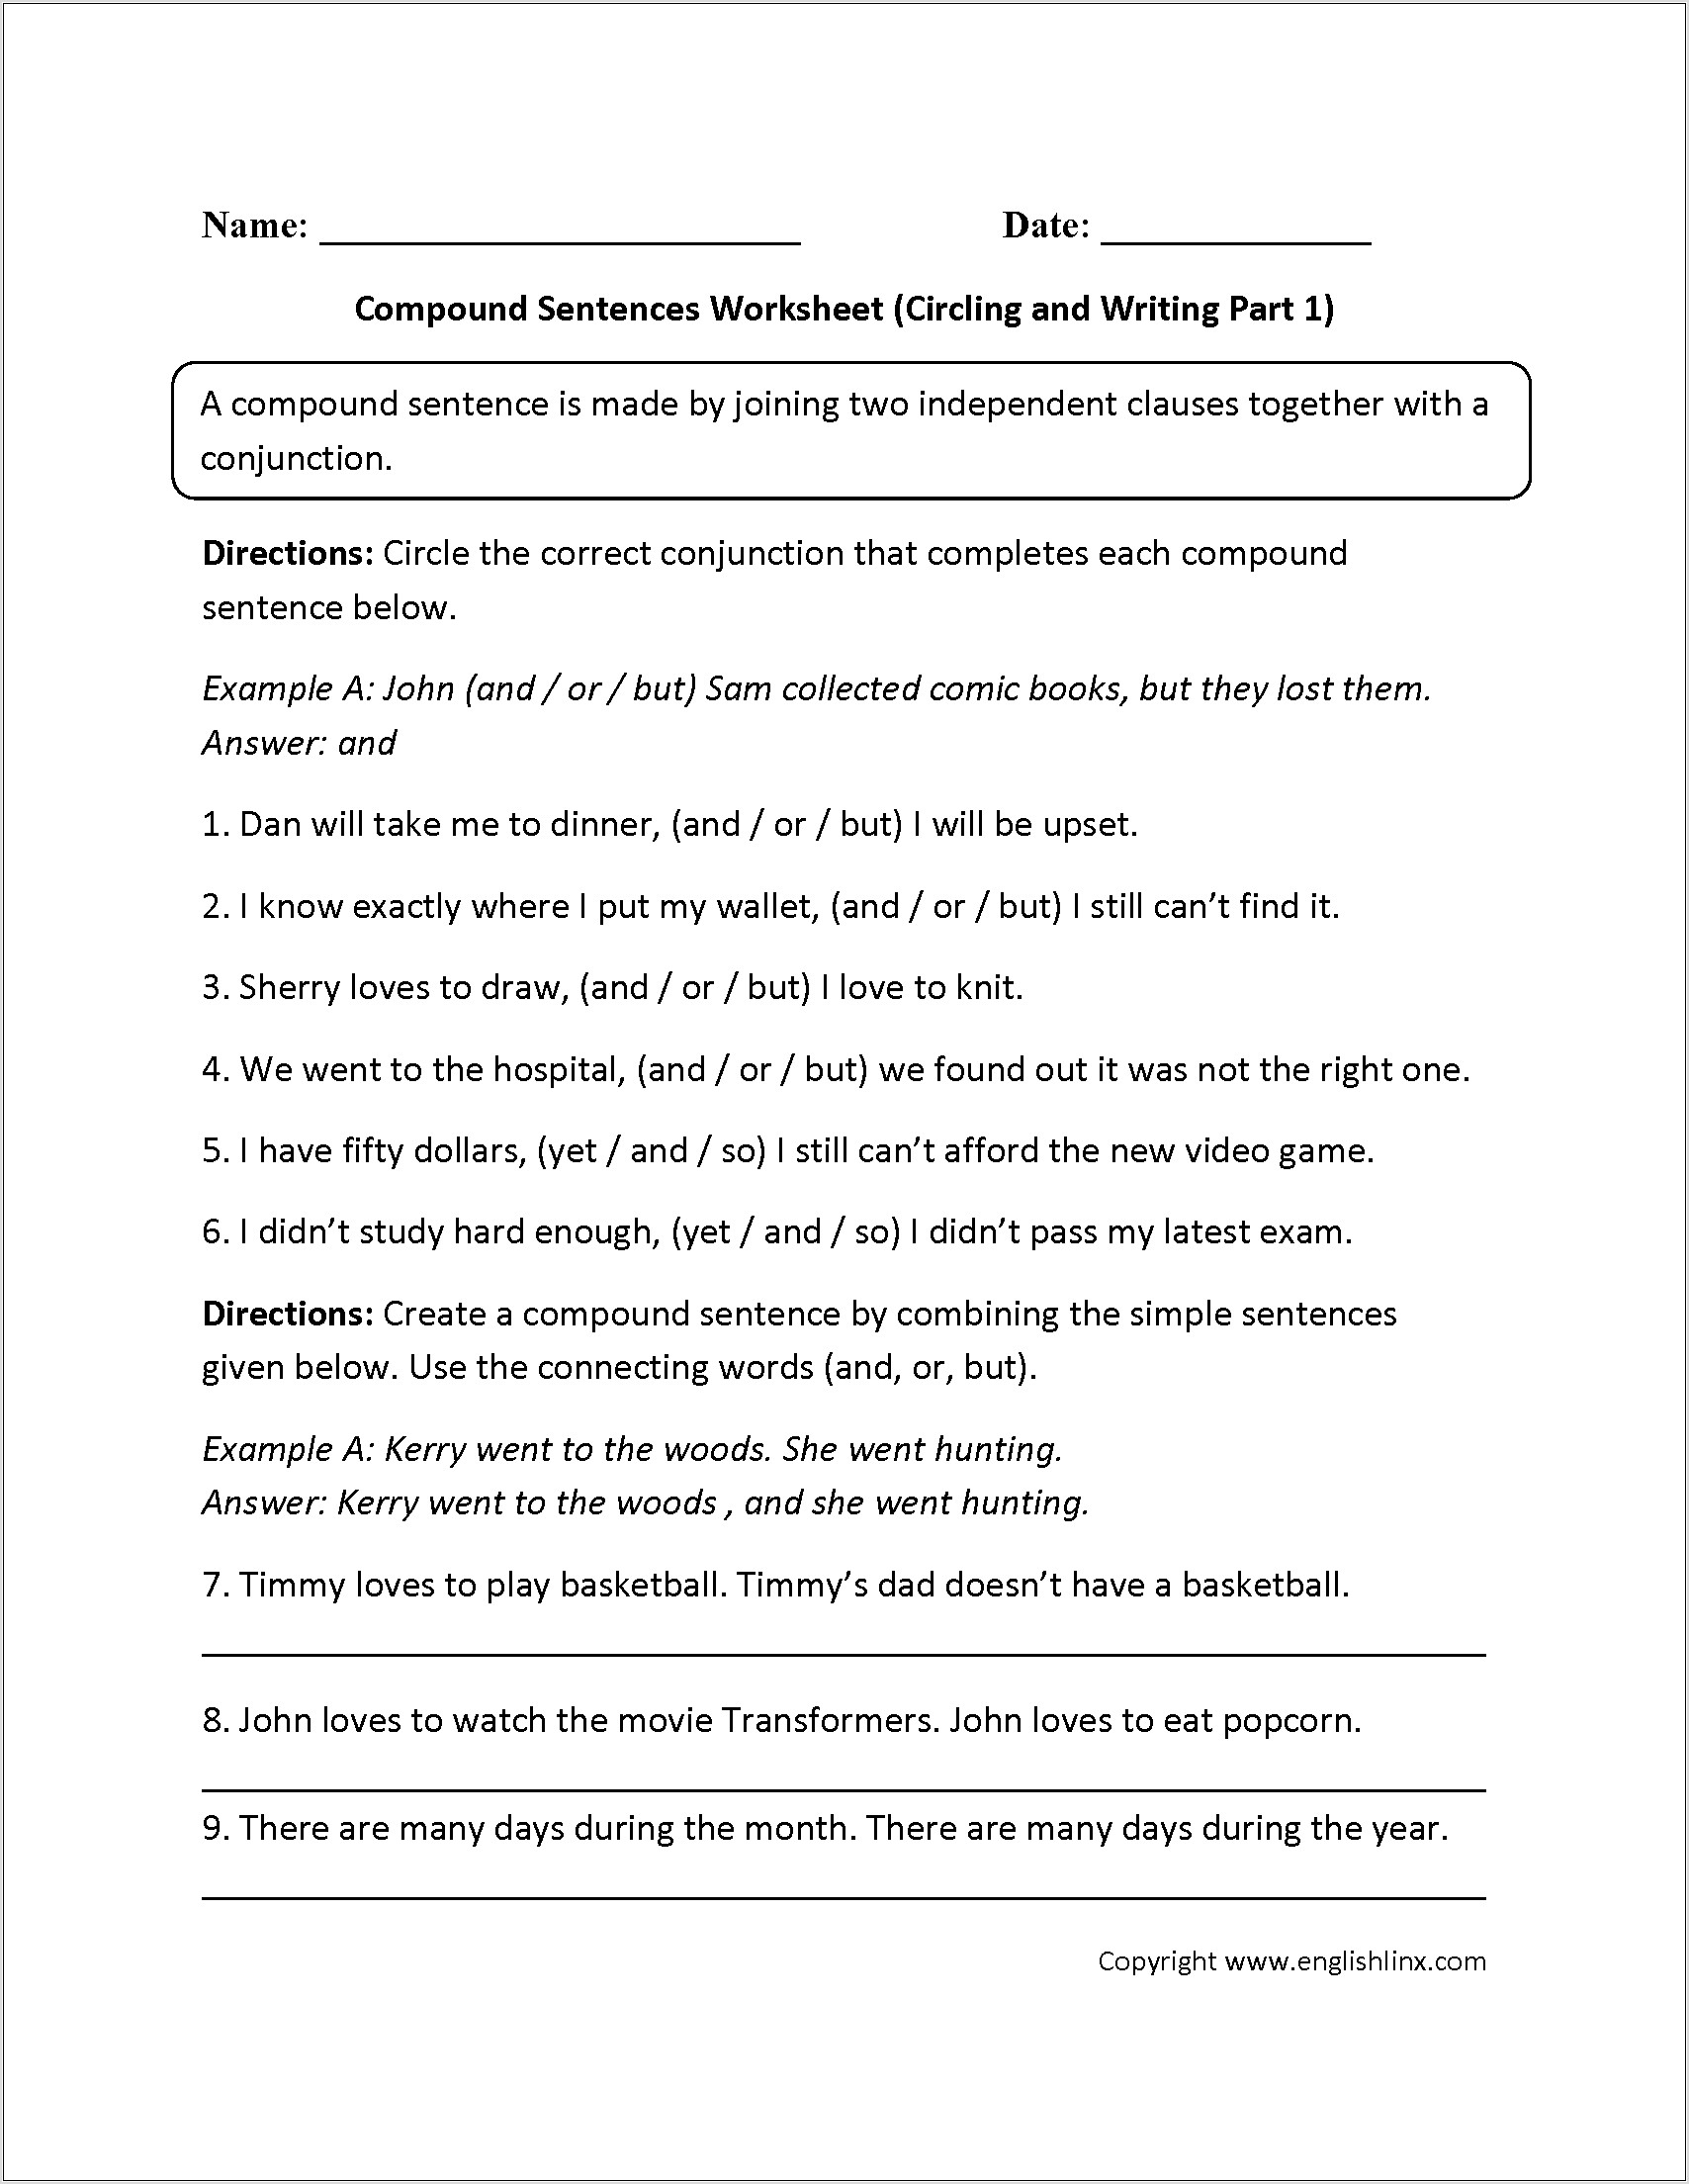 Diagramming Sentences Worksheets Middle School Diagram Restiumani Resume 8byAz4jYnZ